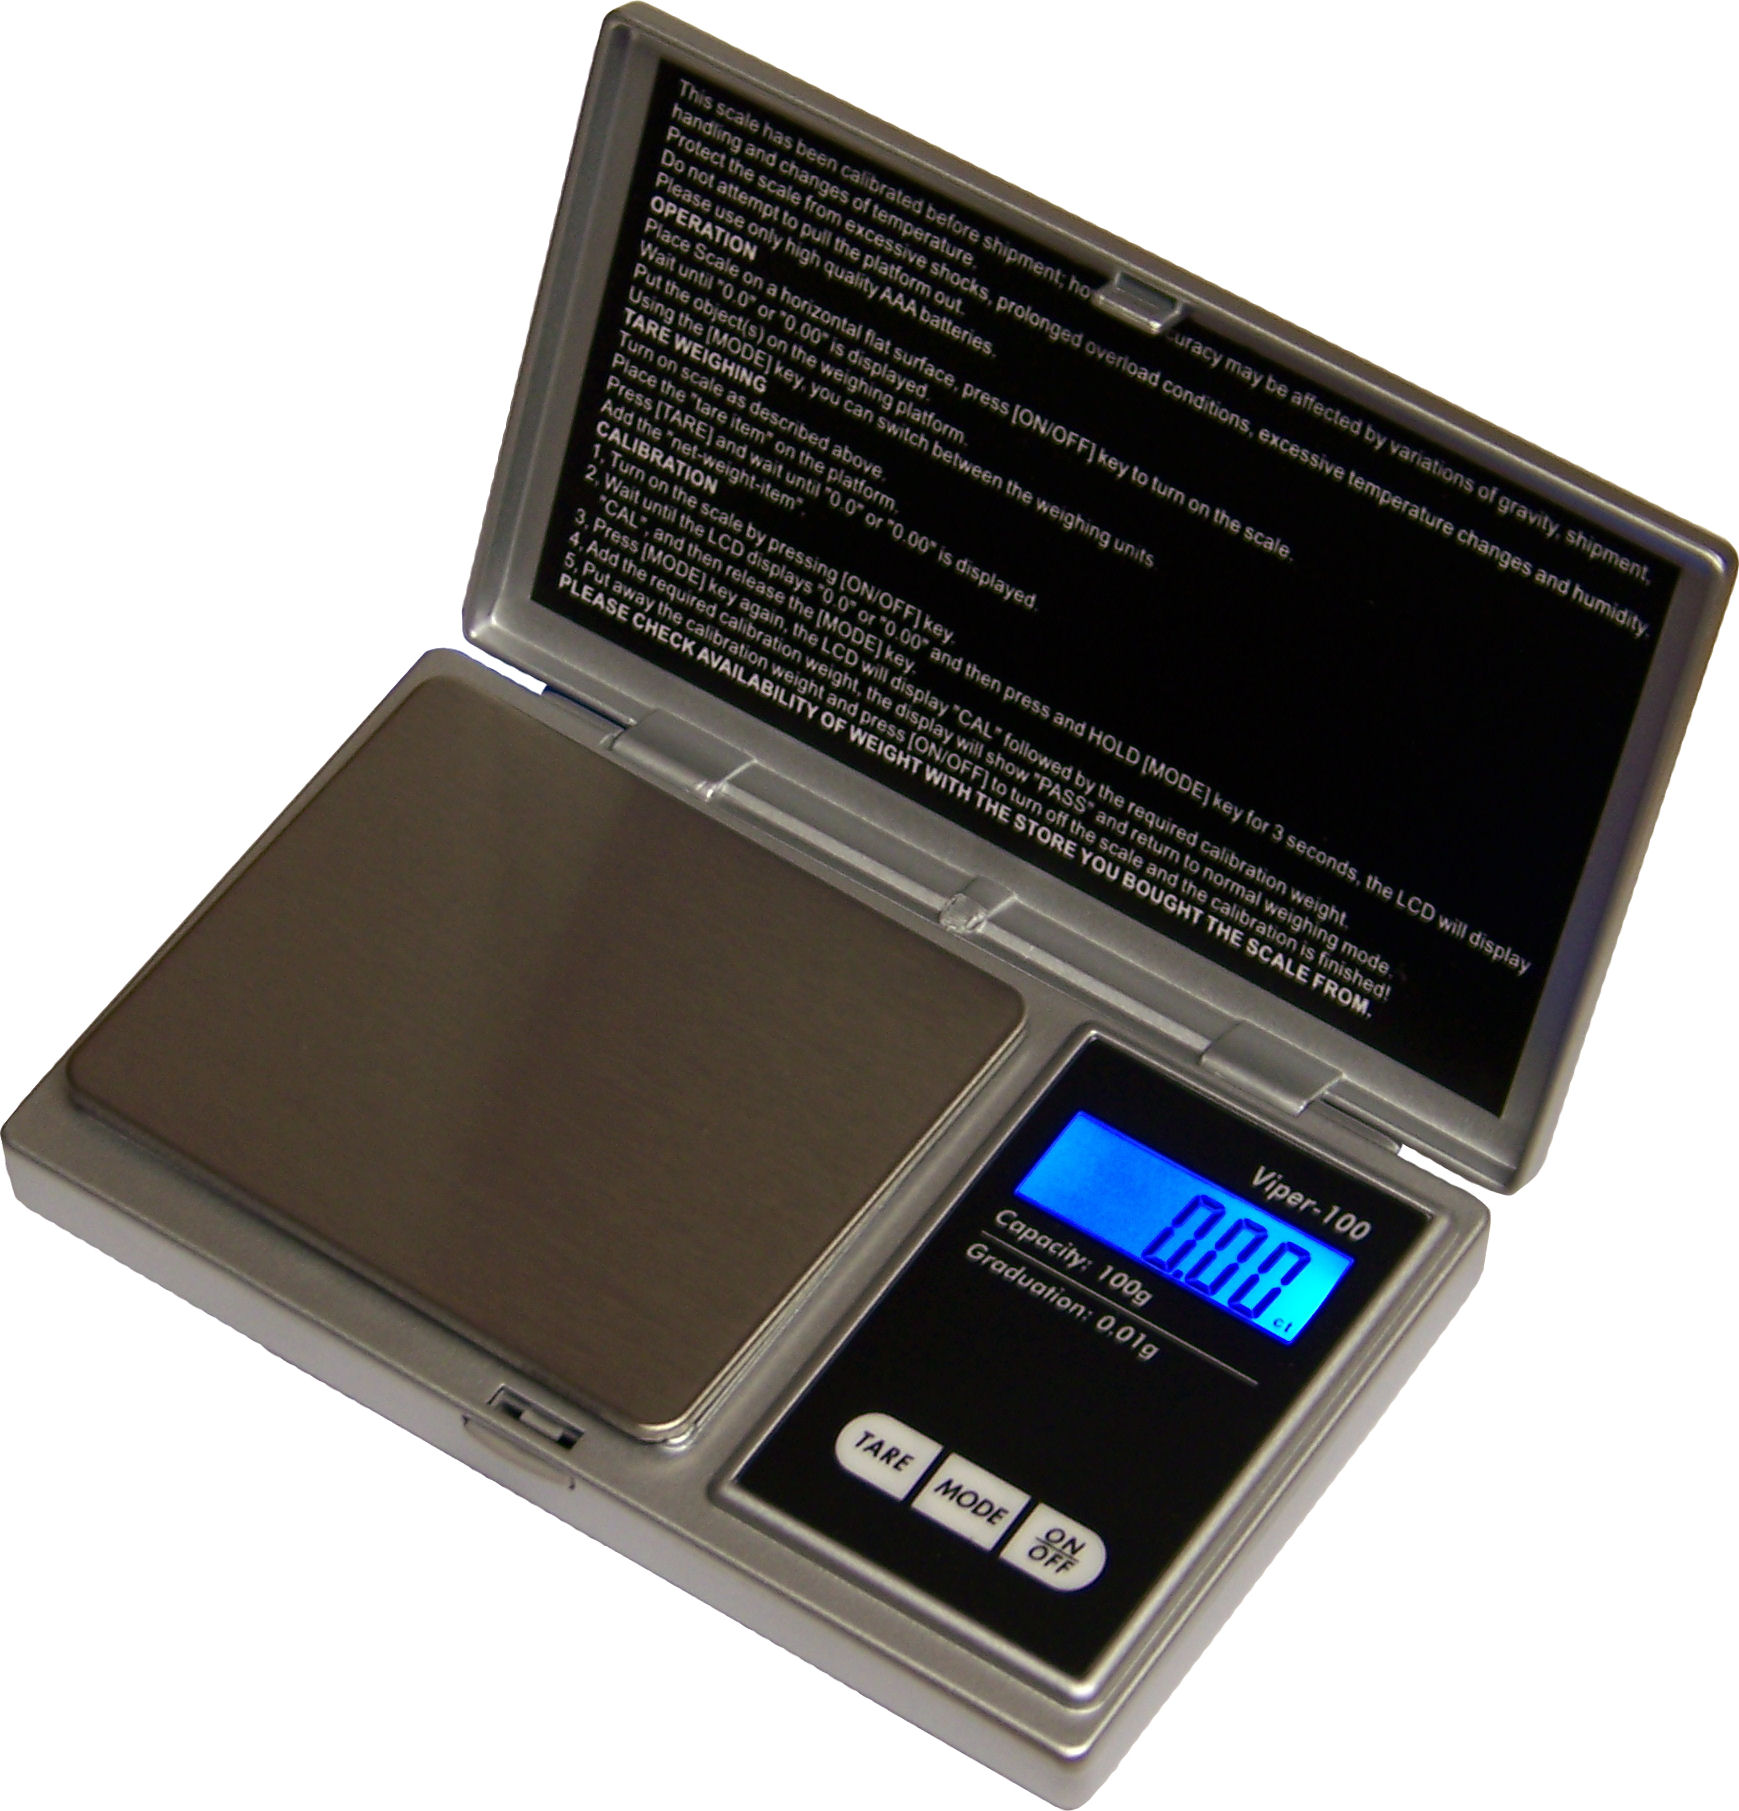 LIBRA MINI Digital Coin Scale, 0.01 - 100 g at